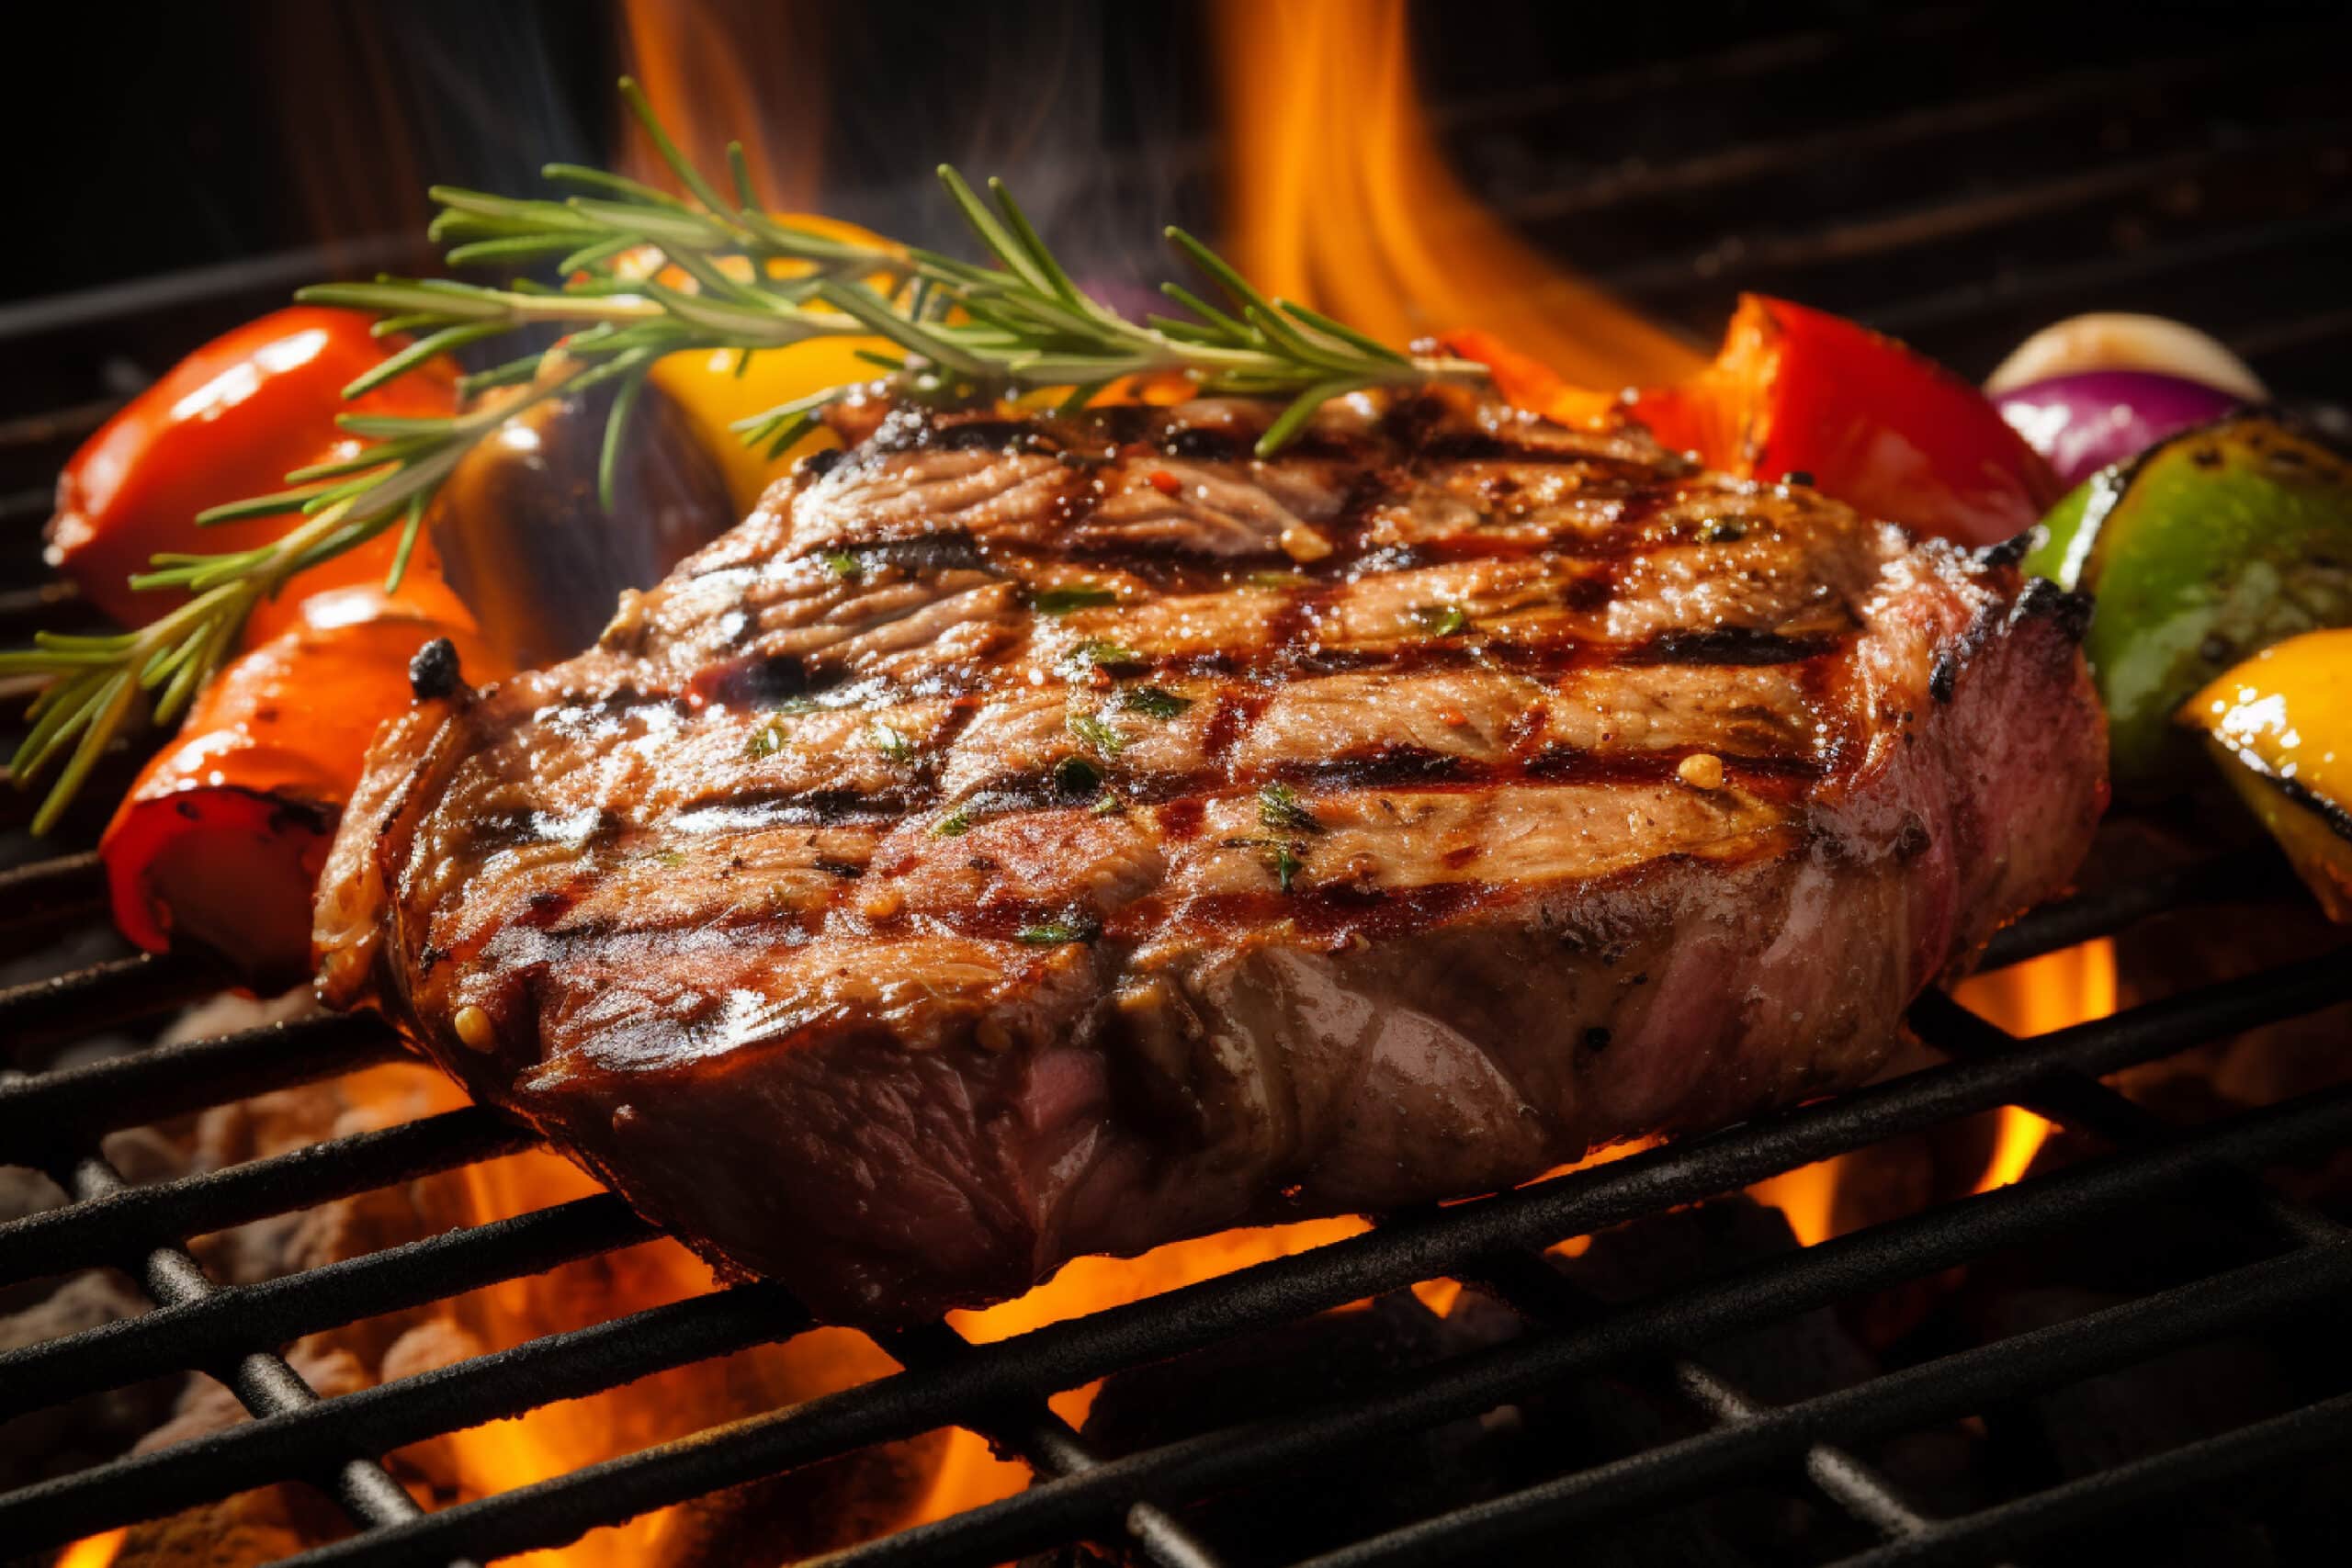 www.appr.com : How To Grill Ribeye Steak On Gas Grill?